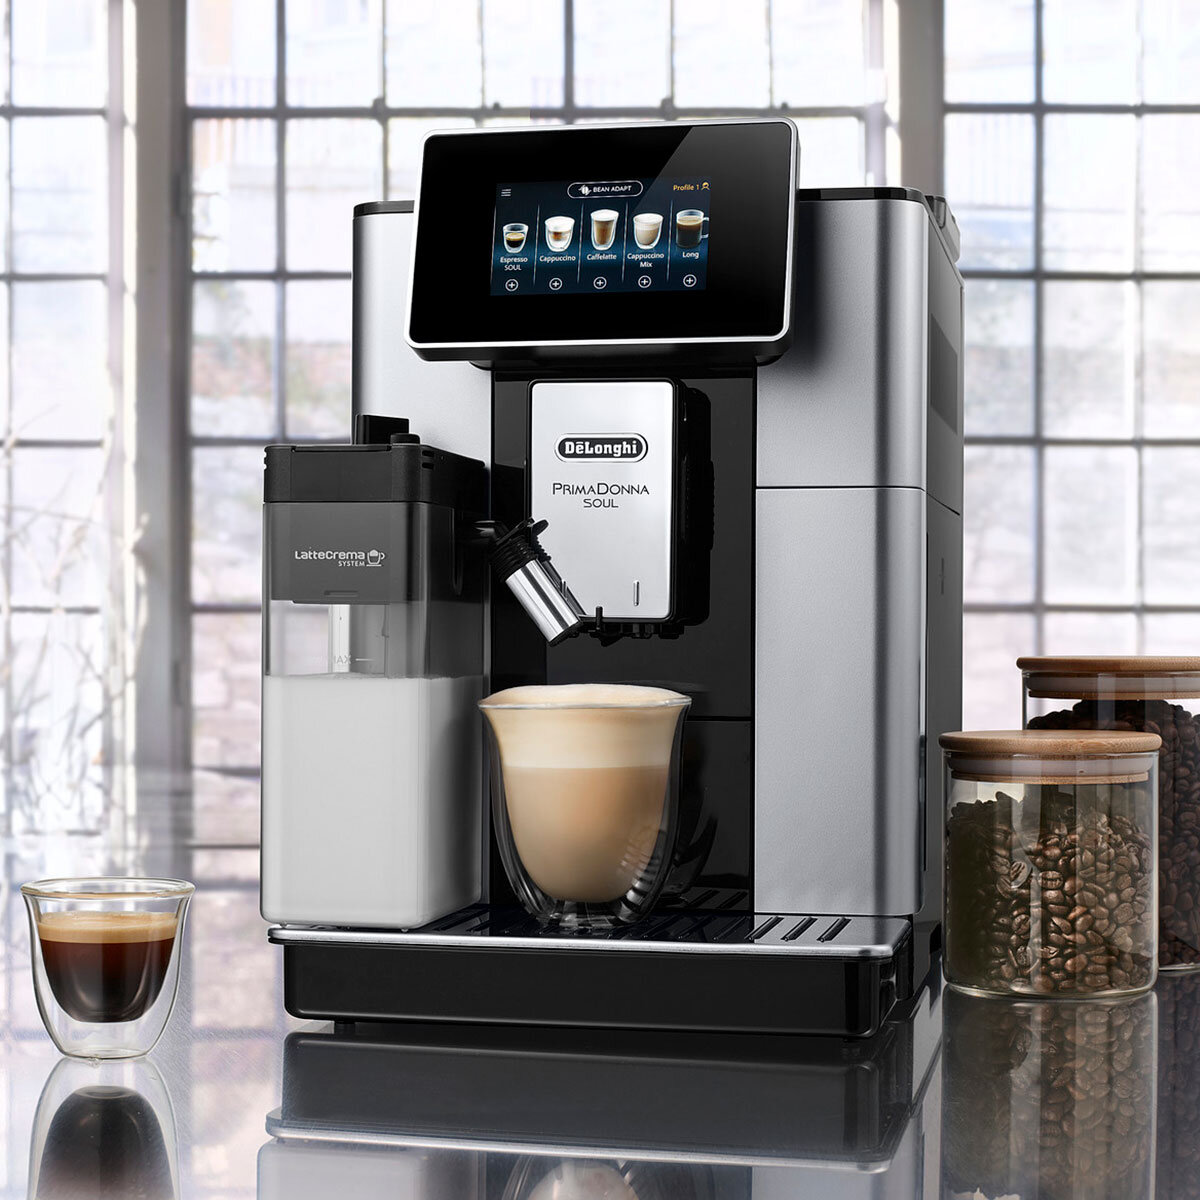 DeLonghi PrimaDonna Elite wifi operated bean-to-cup coffee machine